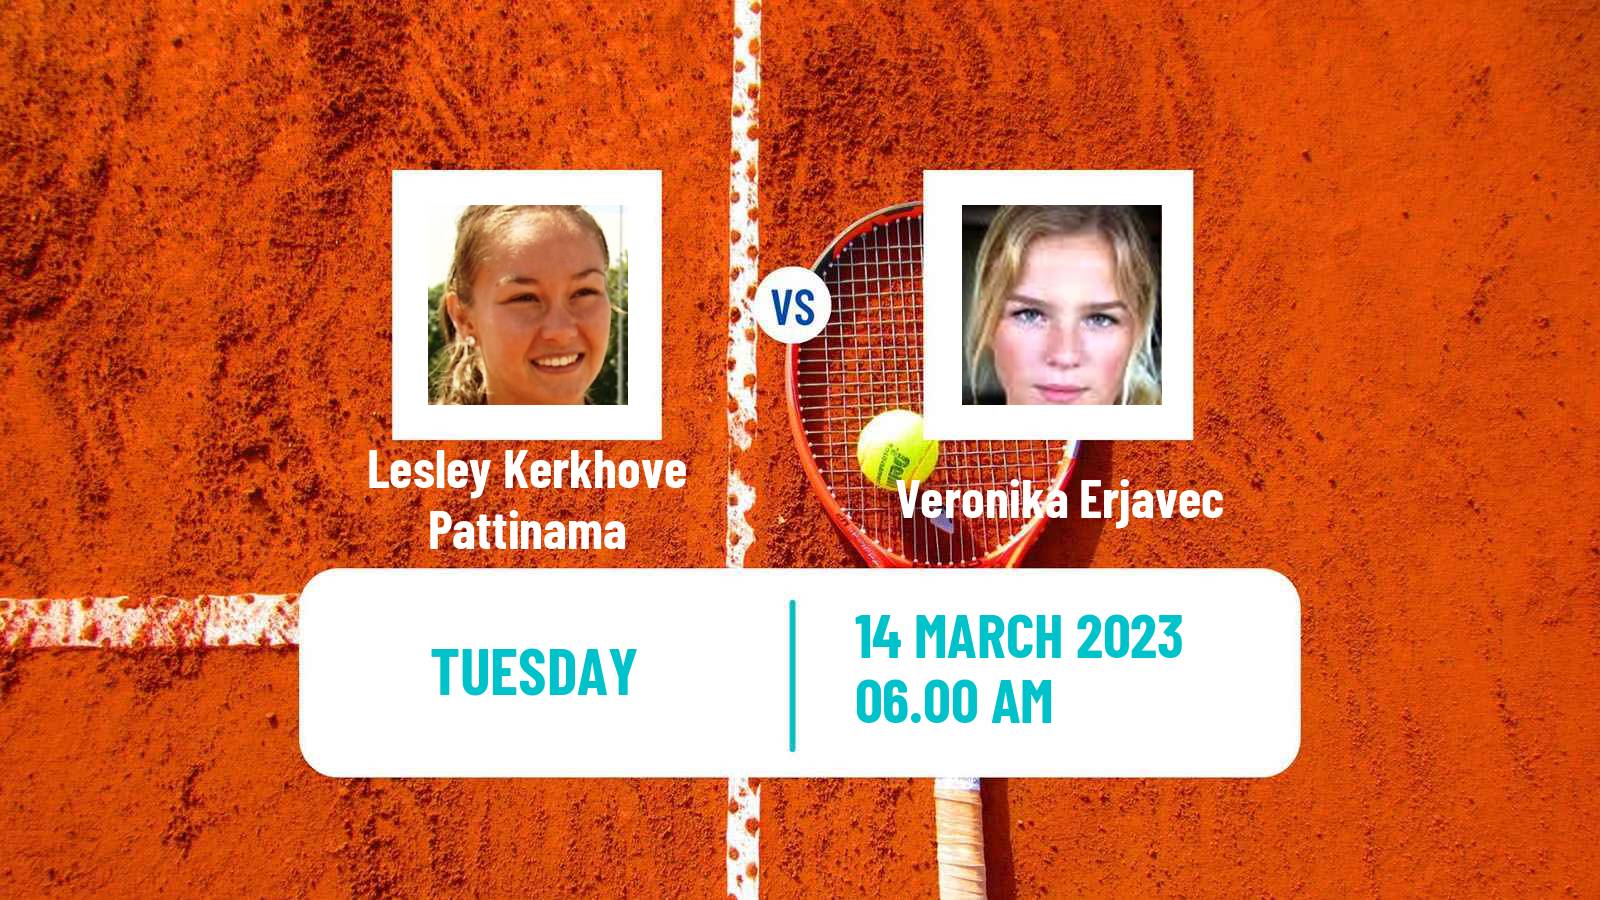 Tennis ITF Tournaments Lesley Kerkhove Pattinama - Veronika Erjavec